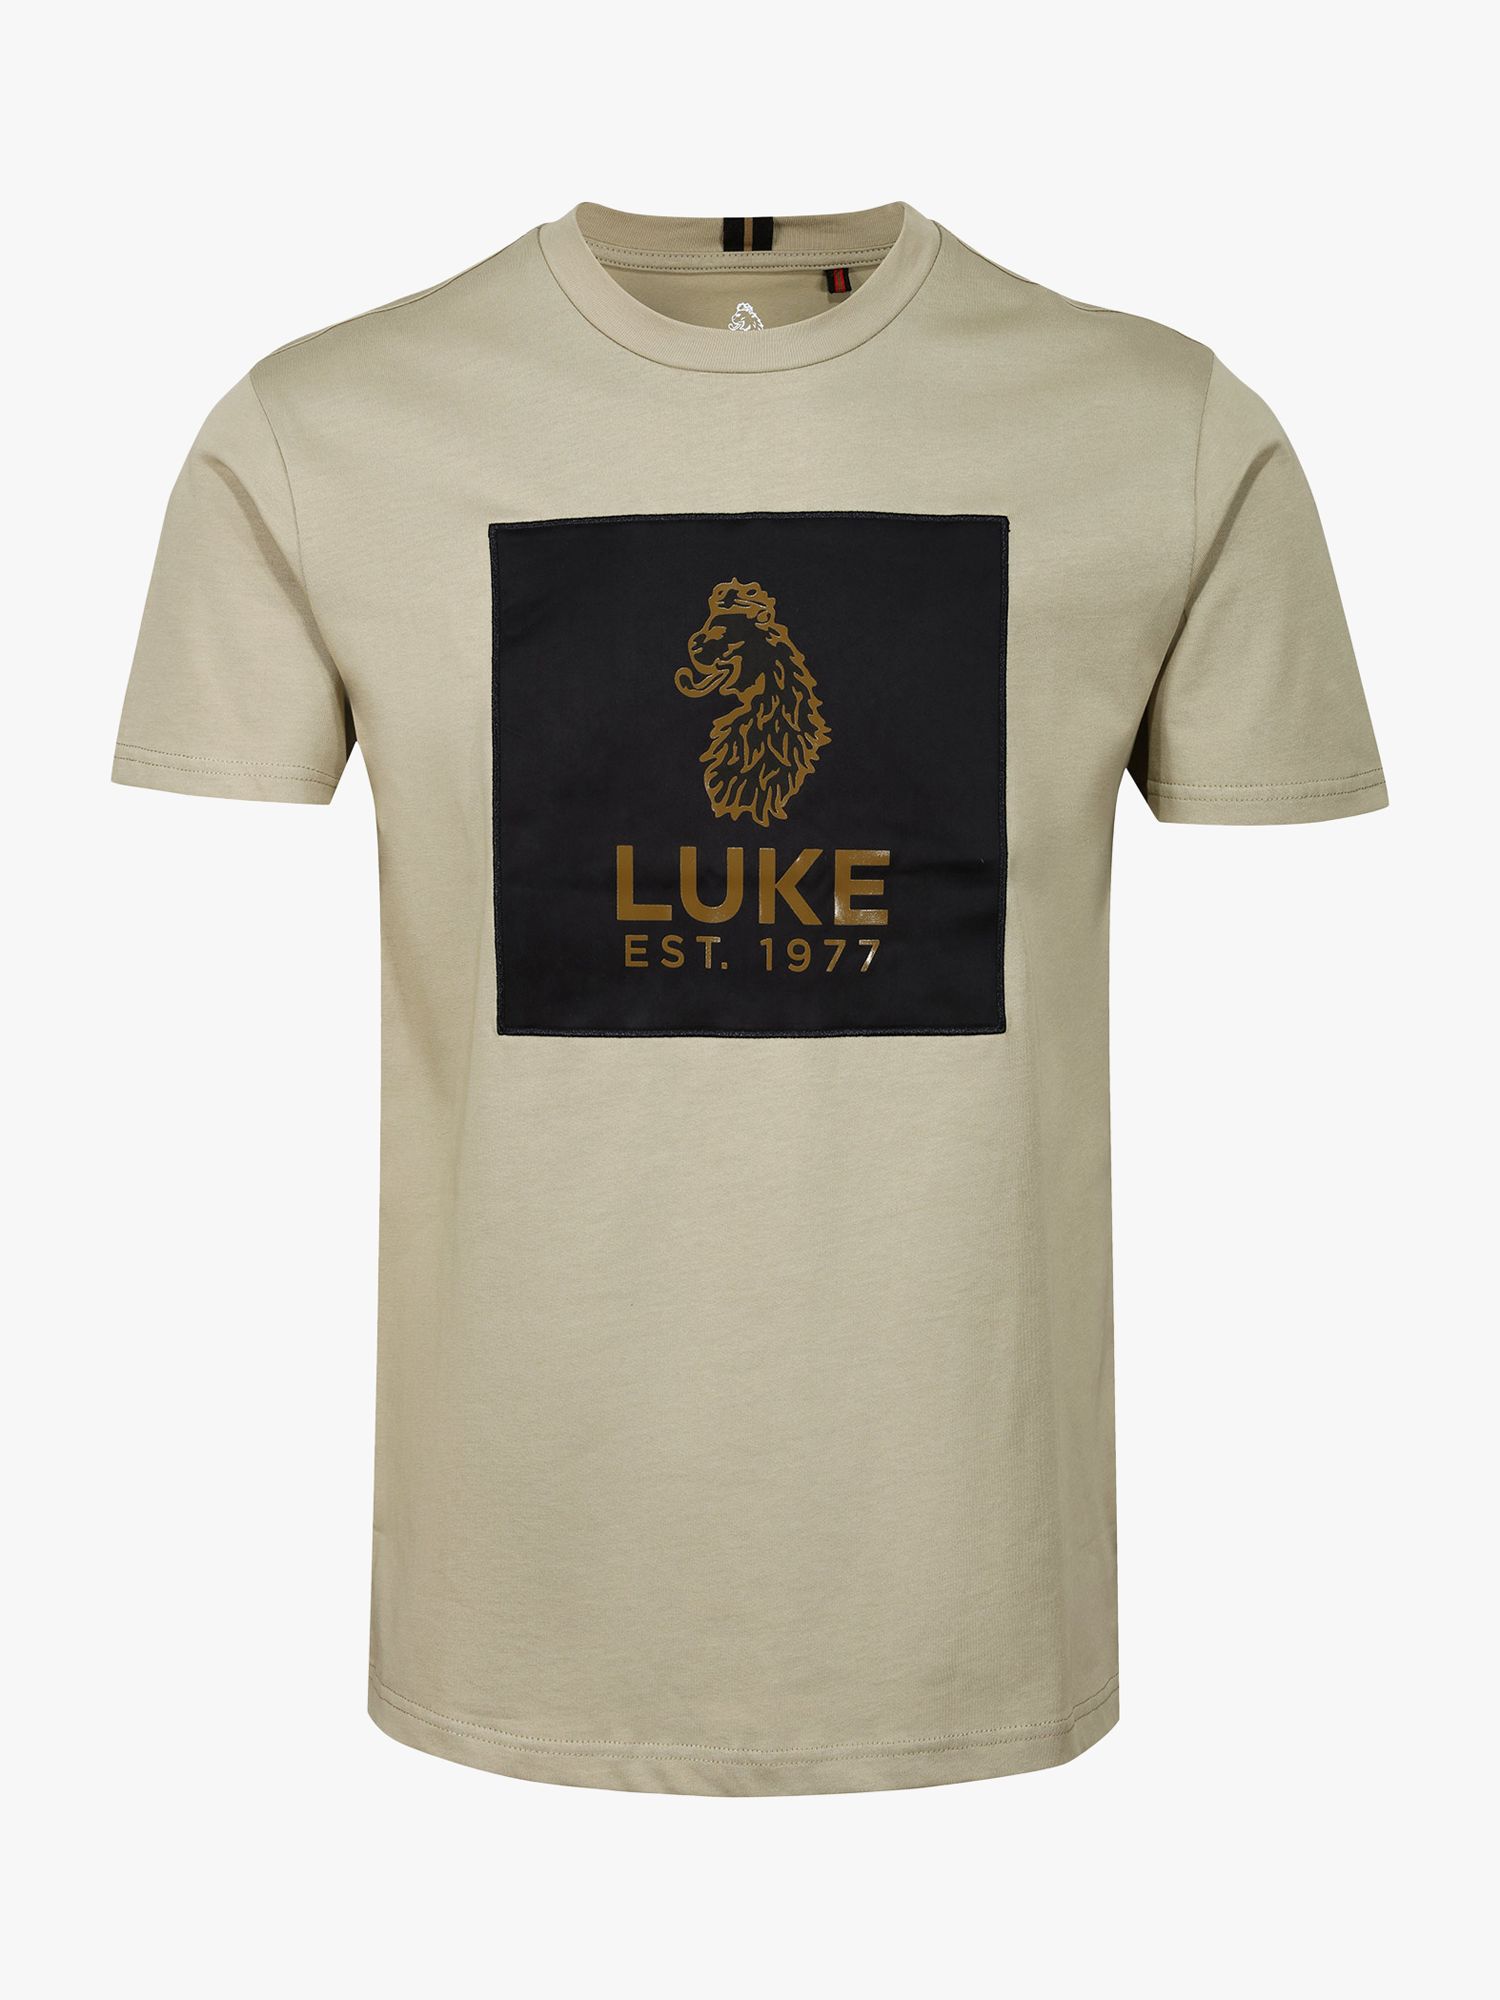 LUKE 1977 Cambodia Logo T-Shirt, Sage, S